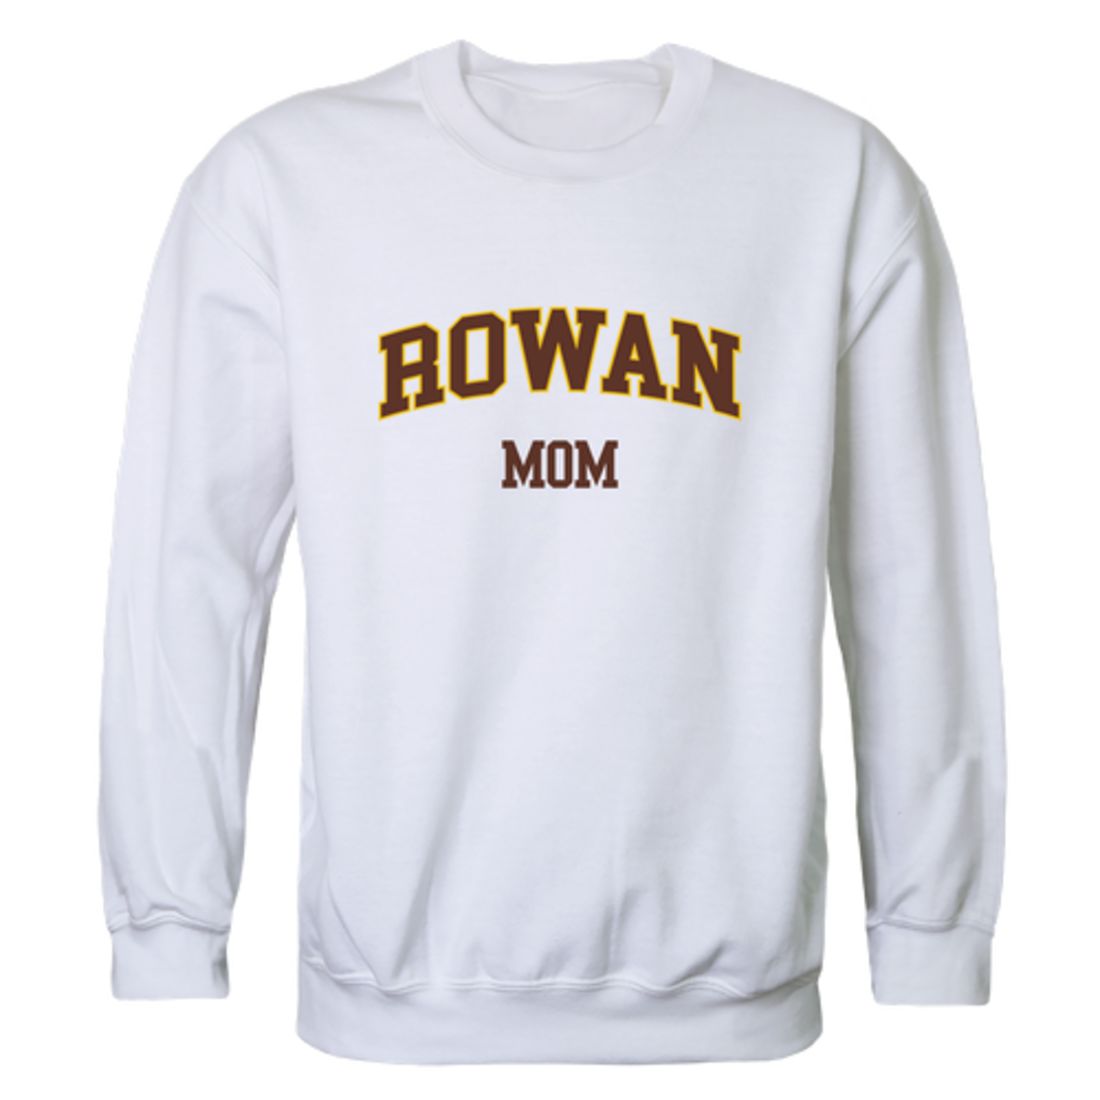 Rowan University Profs Mom Fleece Crewneck Pullover Sweatshirt Heather Charcoal Small-Campus-Wardrobe